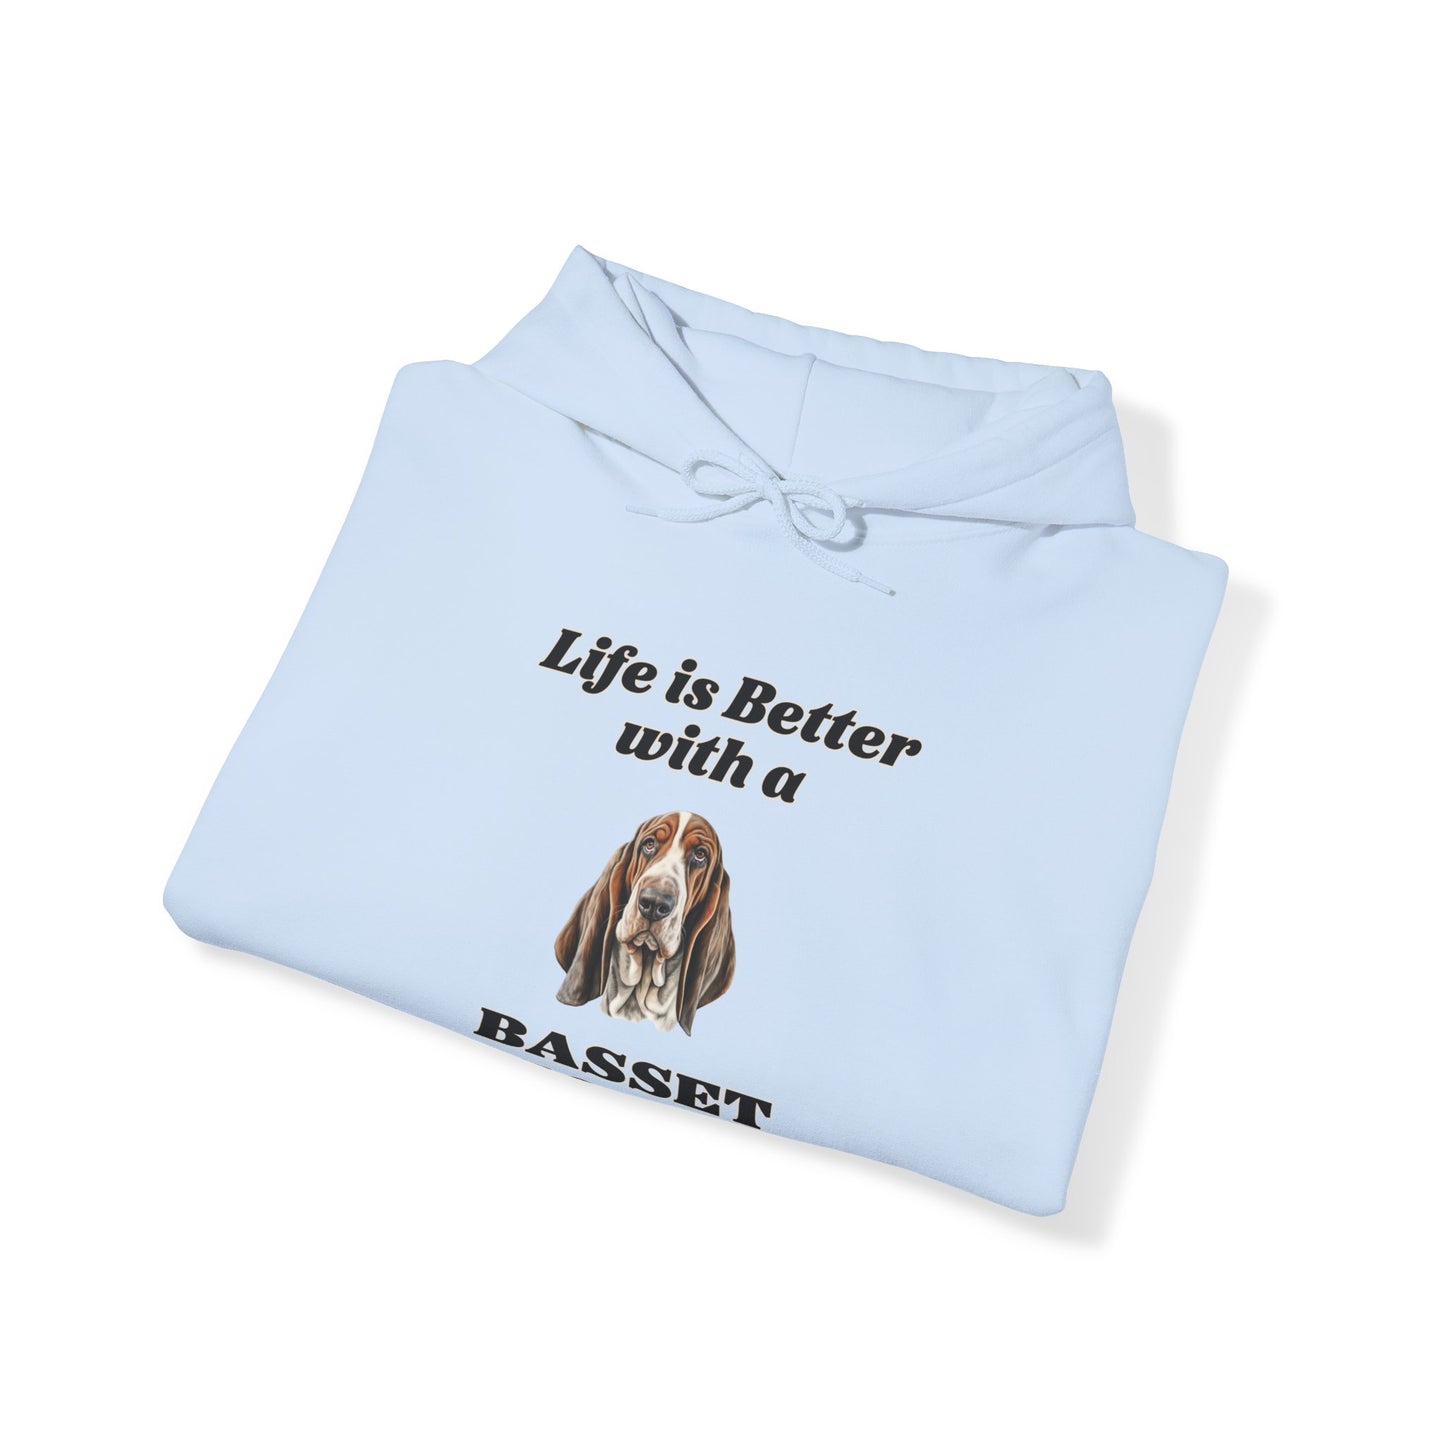 Basset Hound hoodie - dog mom gift